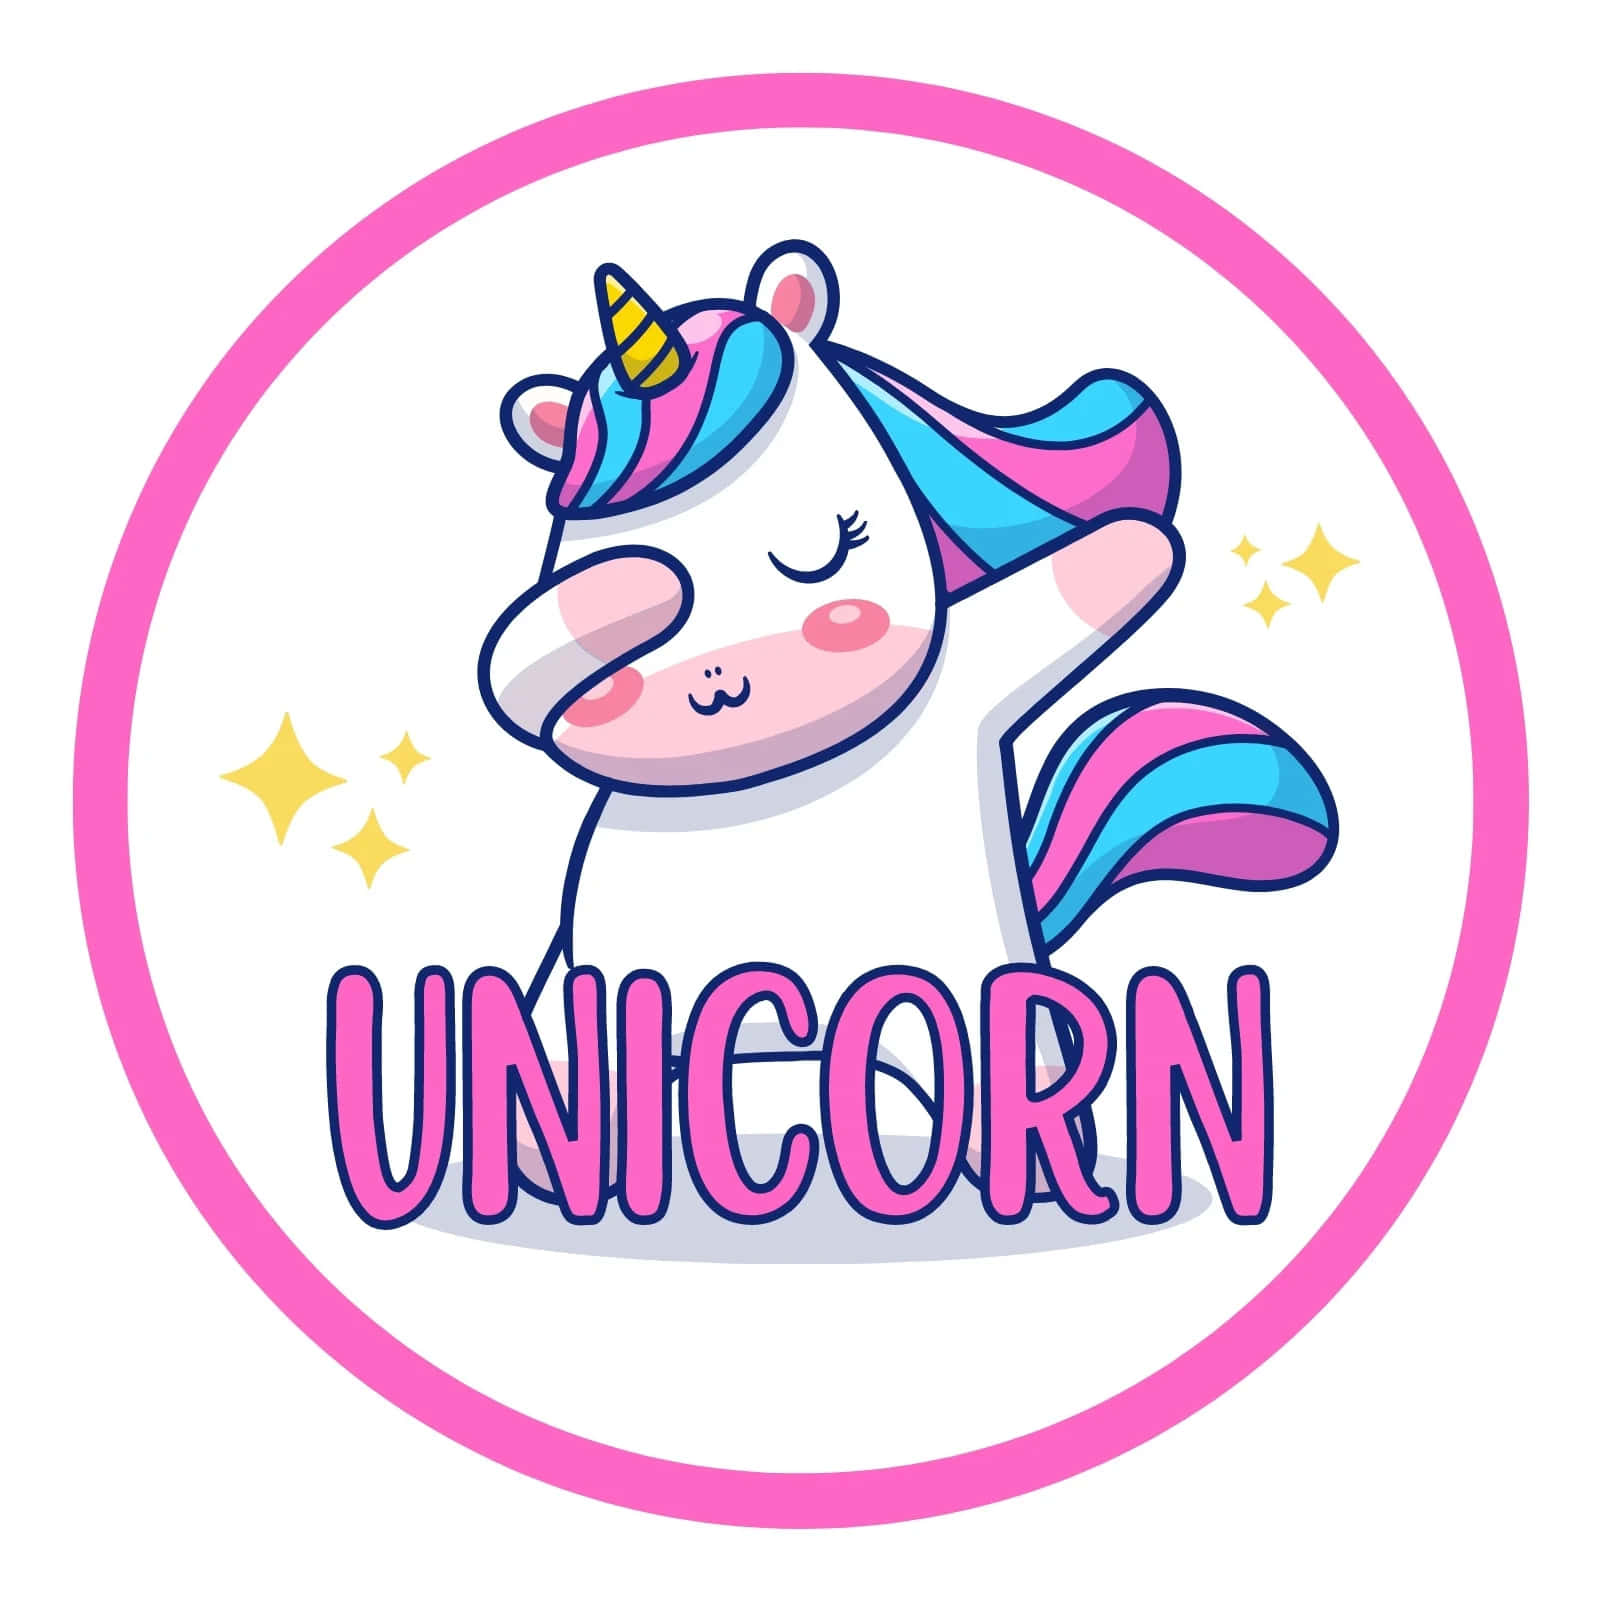 Unicorn Sticker - A Cute Cartoon Unicorn With A Pink And White Background